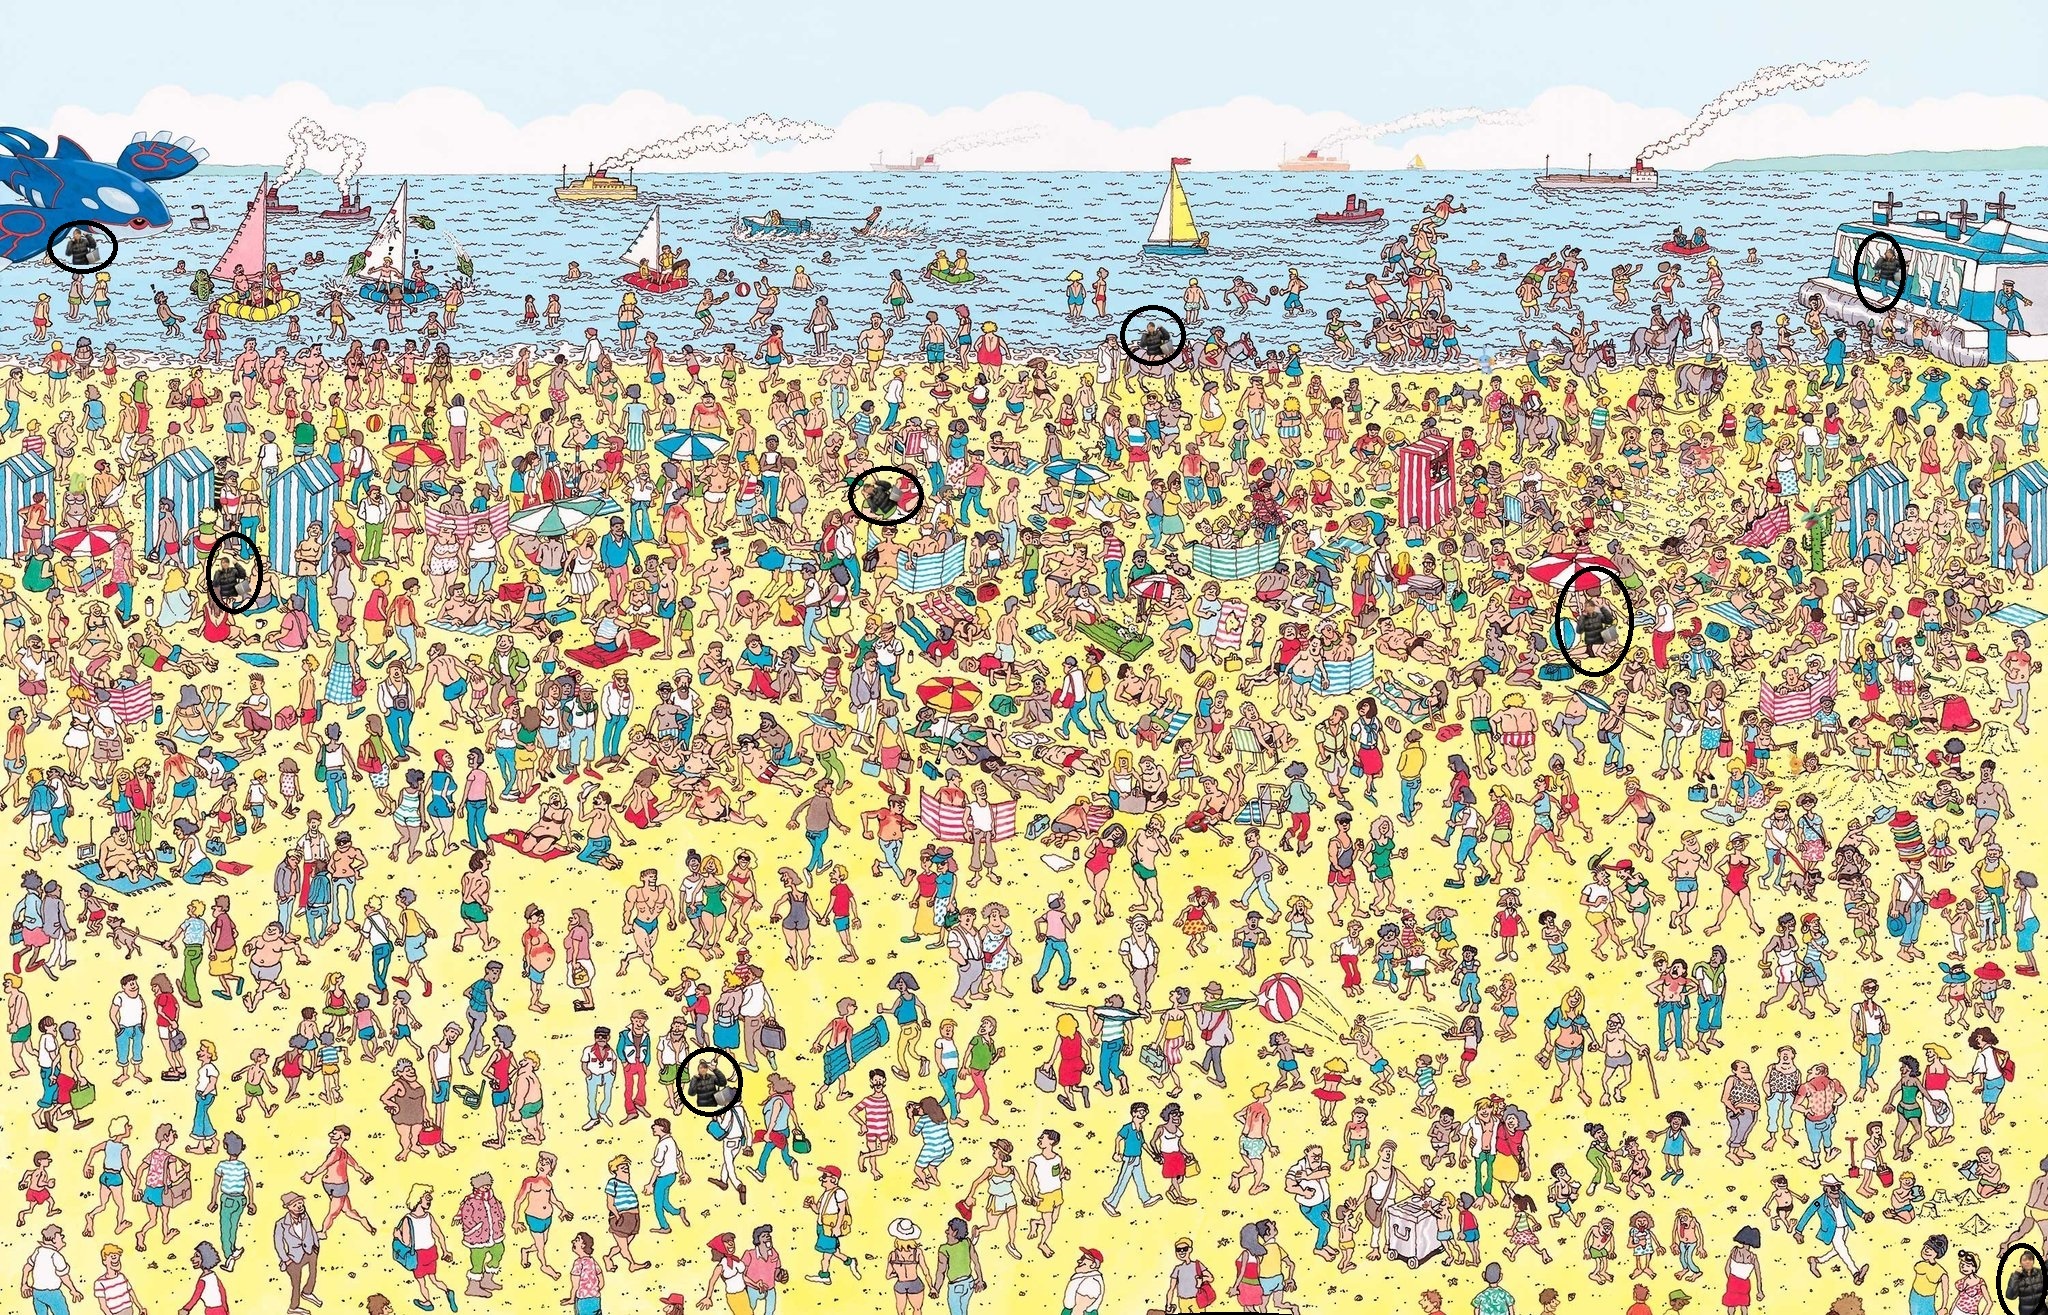 Au ou est. Find Waldo. Find the Waldo easy. Найти Валдо на картинке.